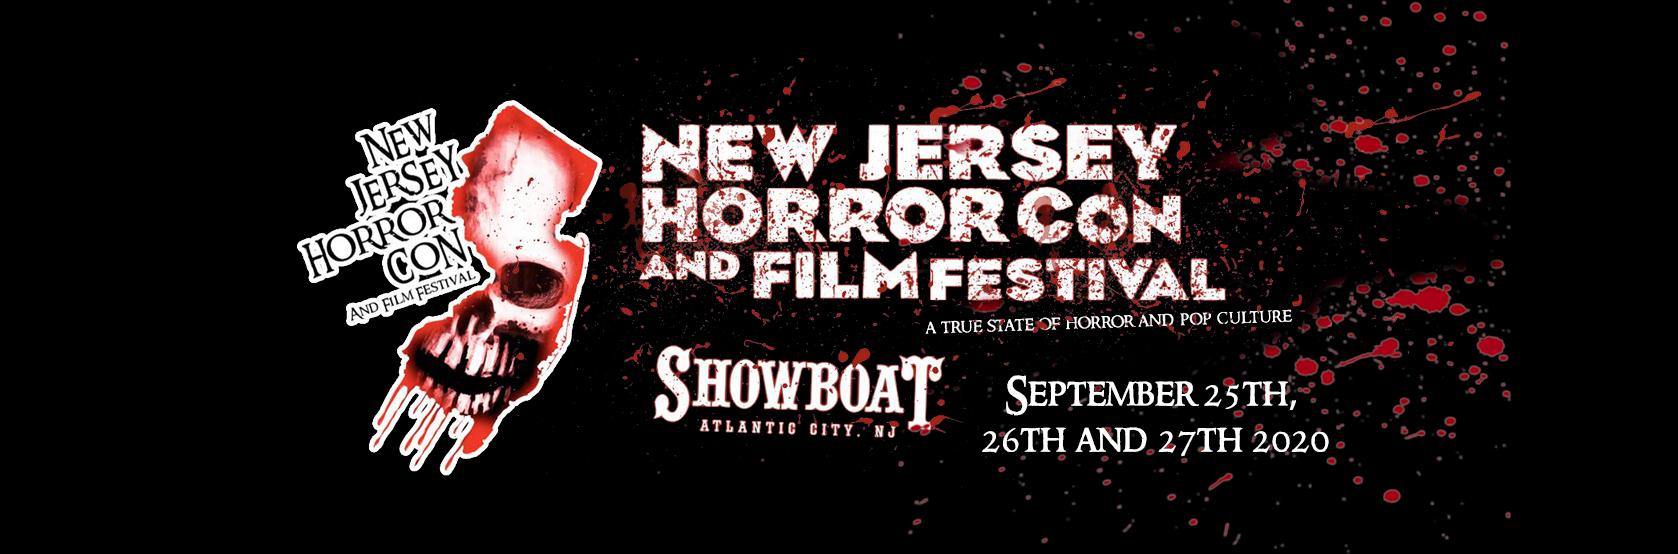 NJ Horror Con Tickets For FALL 2020